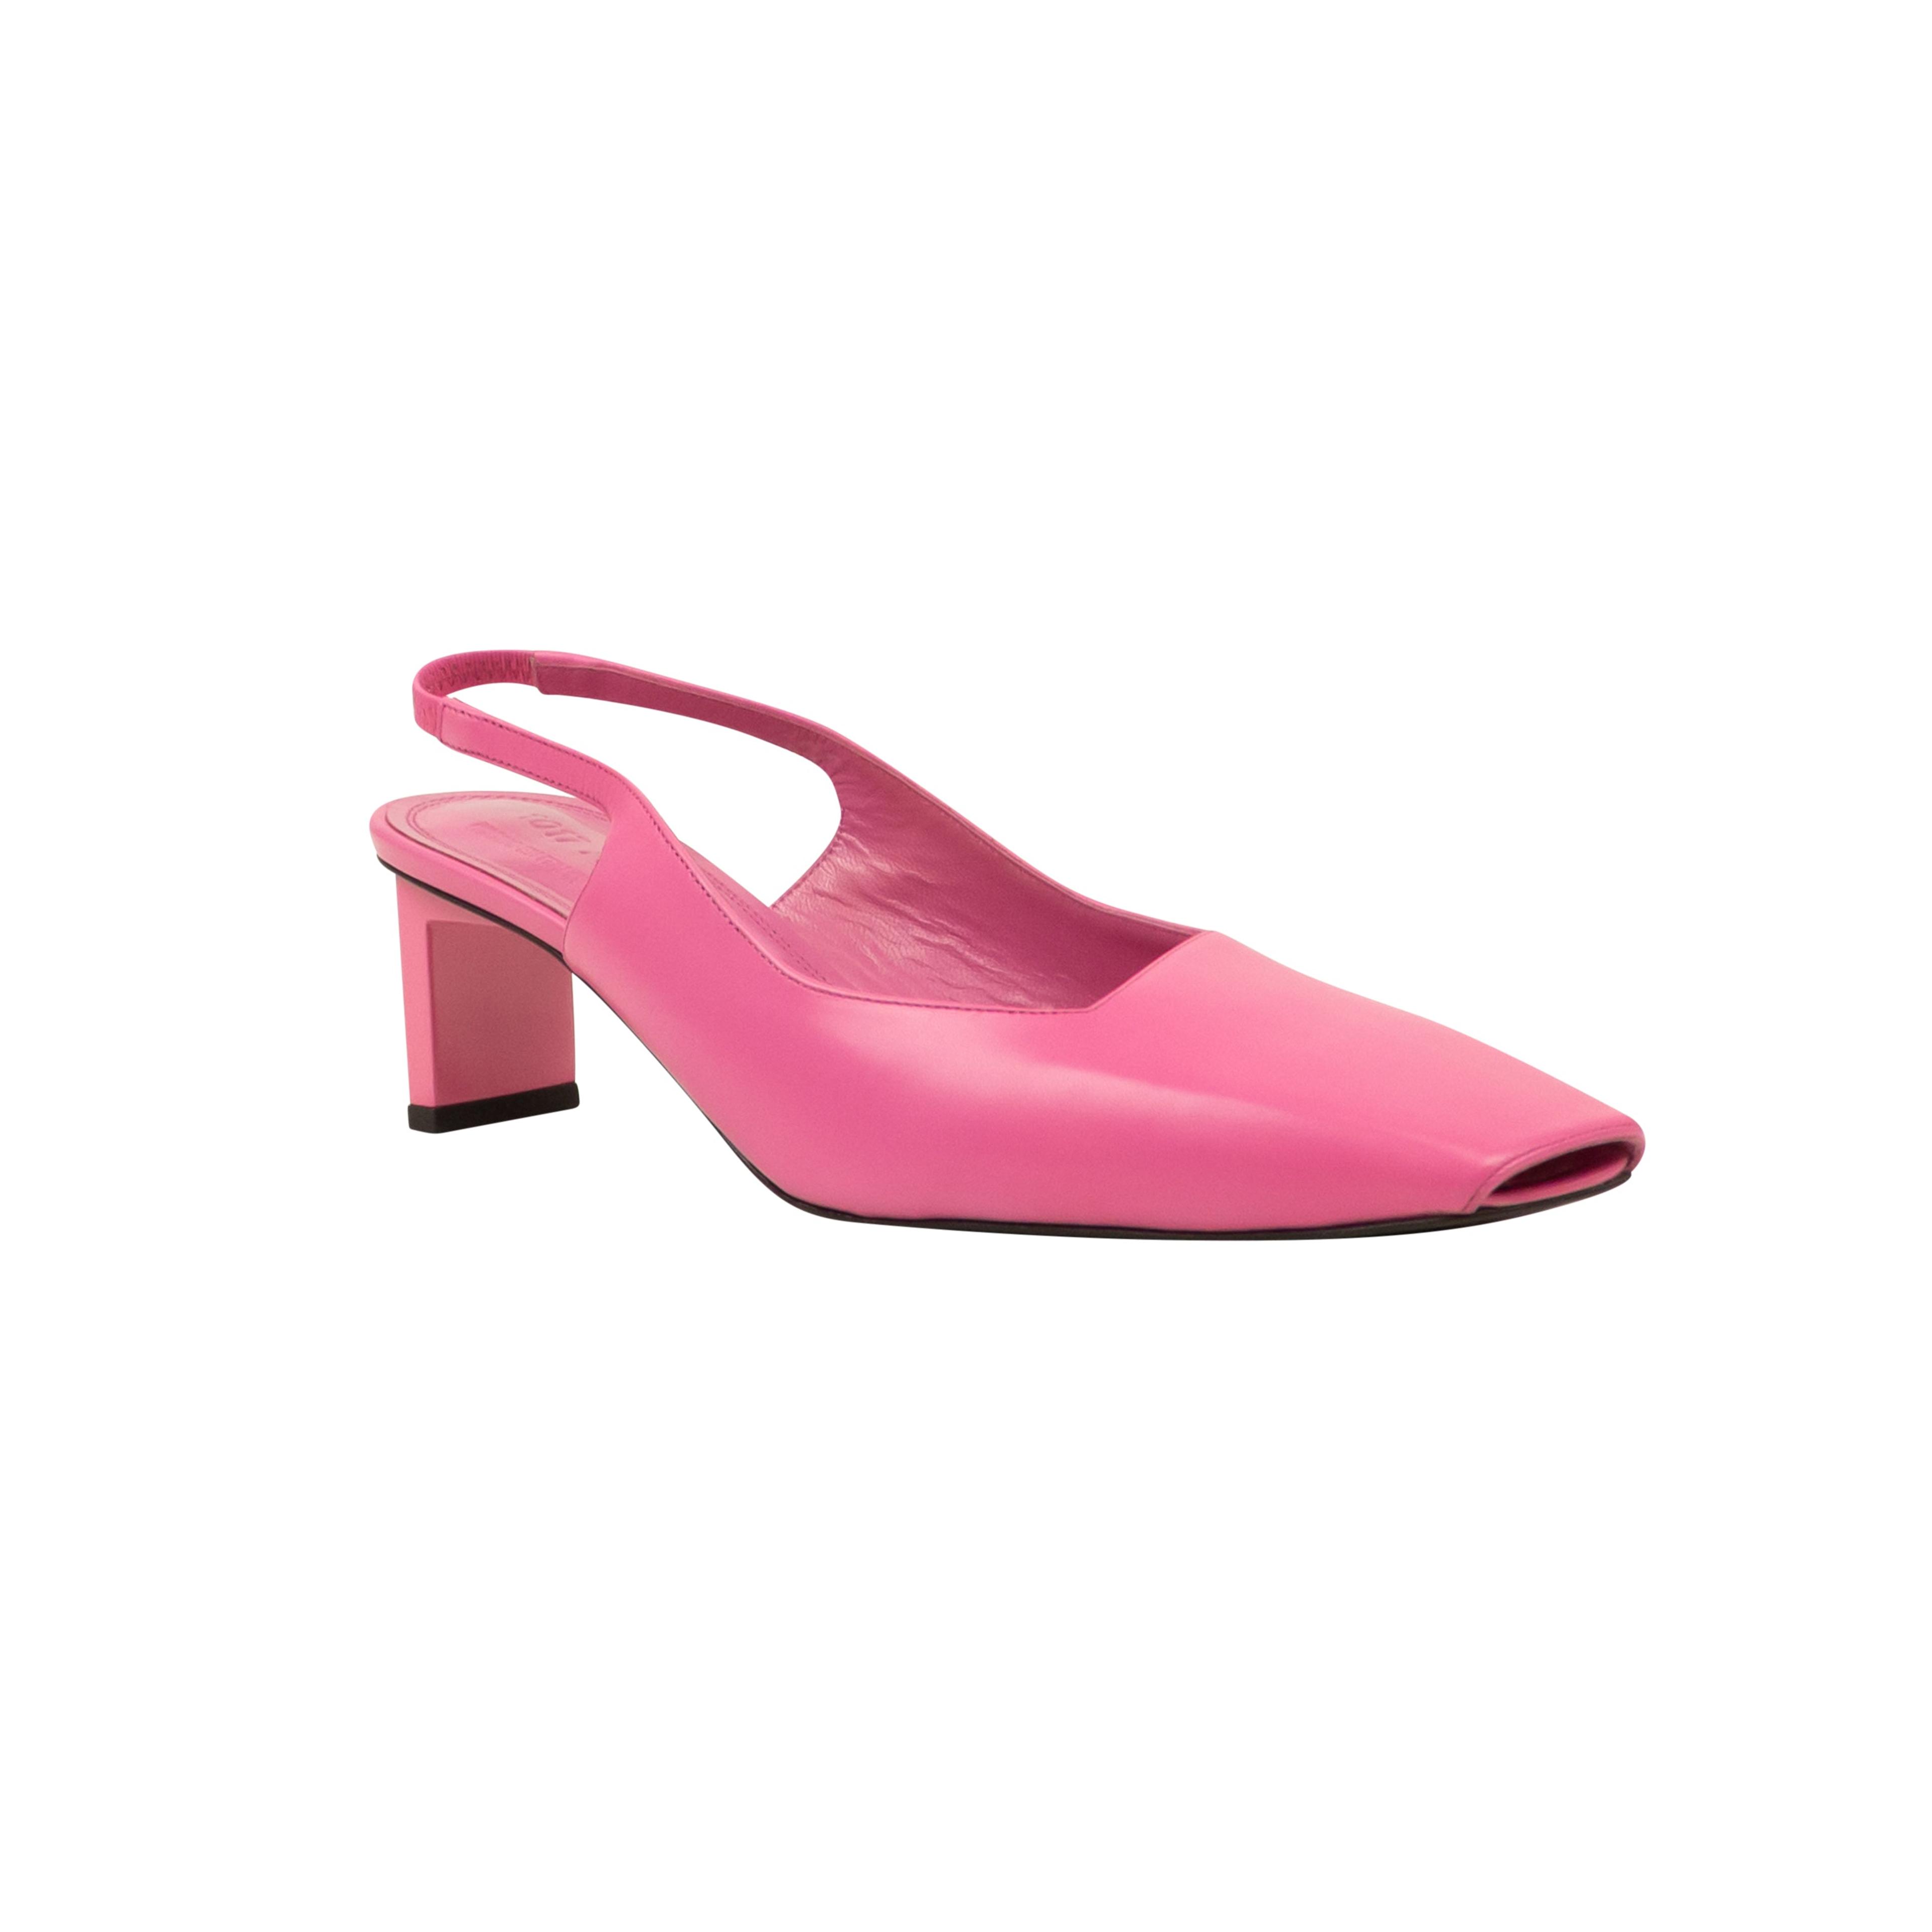 Alternate View 1 of Pink BETTA Leather Slingback Pump Heels